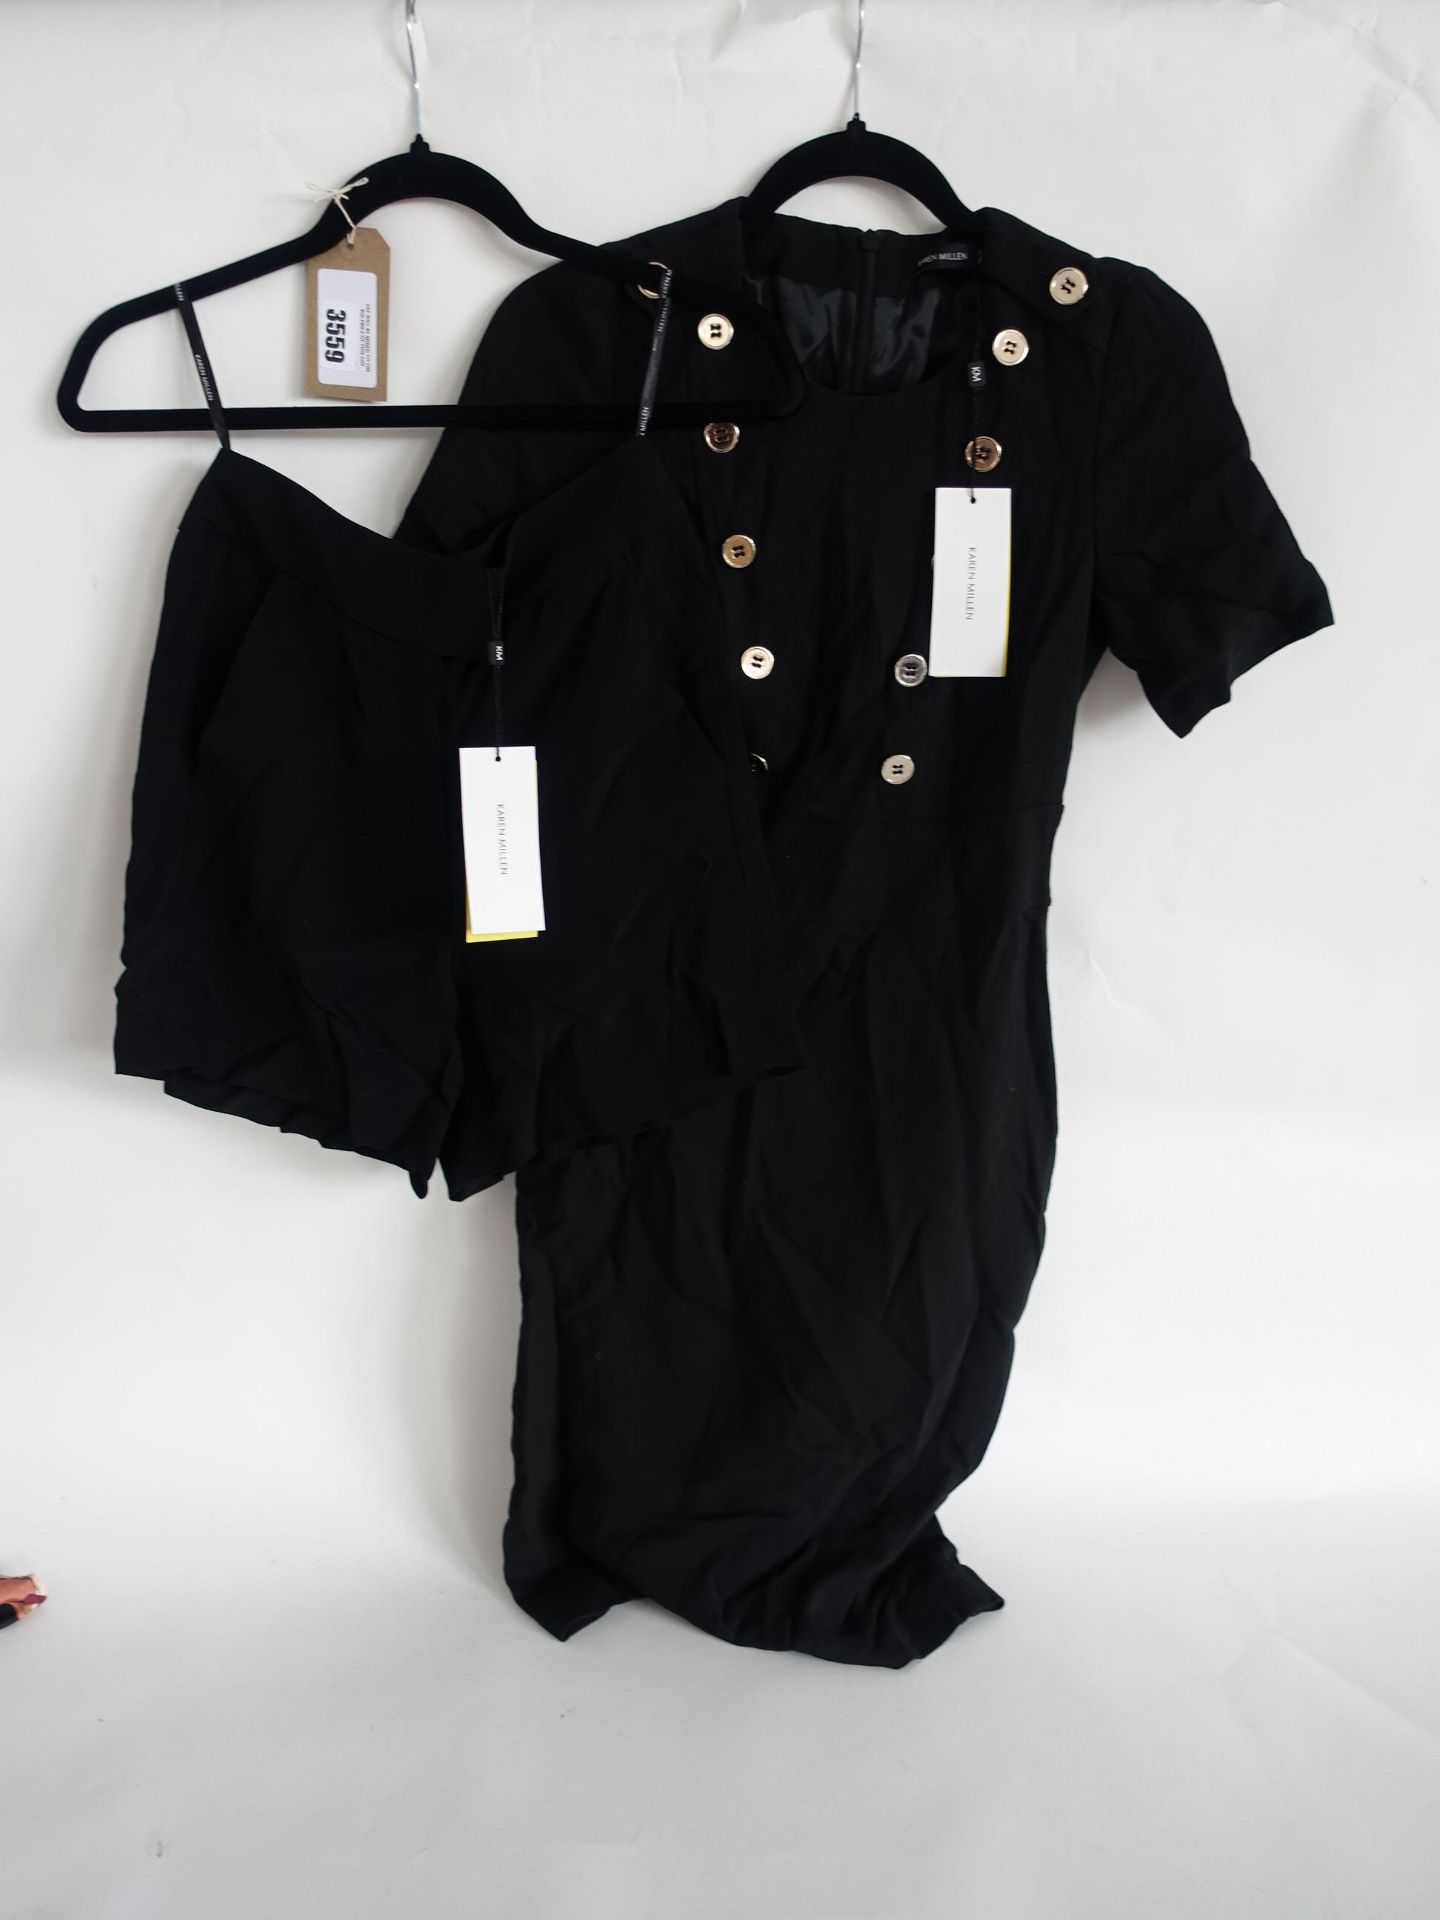 Karen Millen black tuxedo shorts size 6 and Karen Millen black day dress size 6